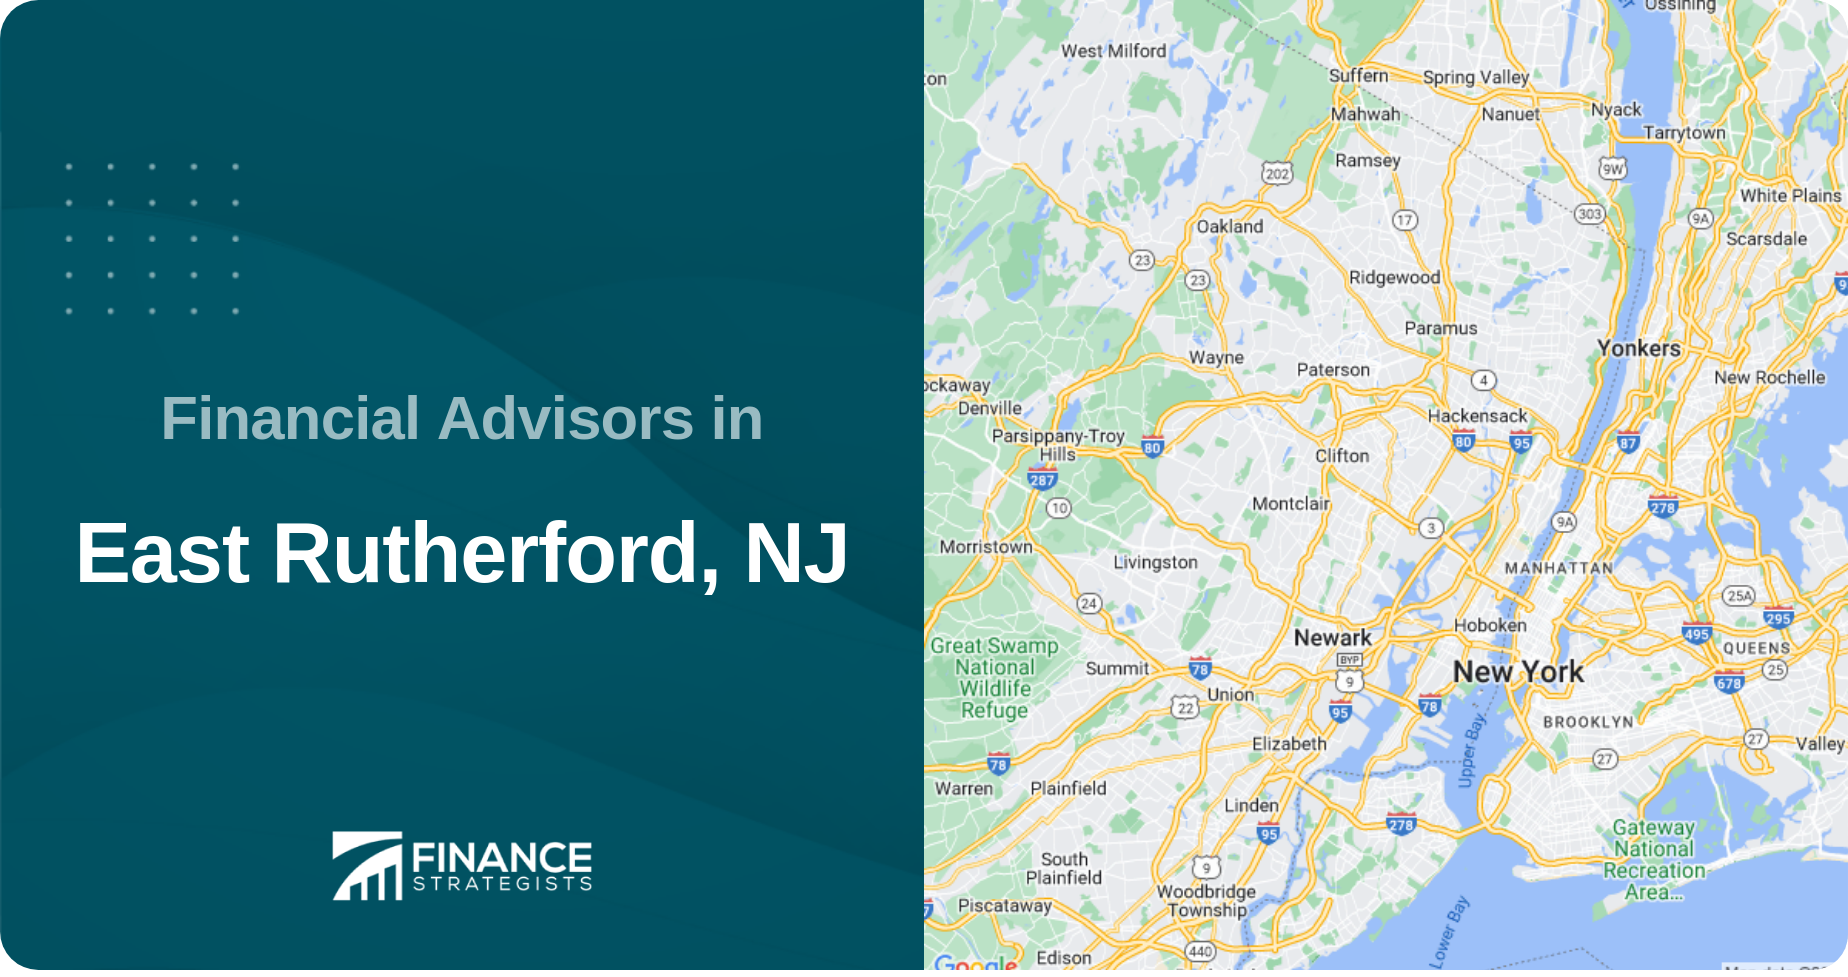 Financial Advisors in East Rutherford, NJ